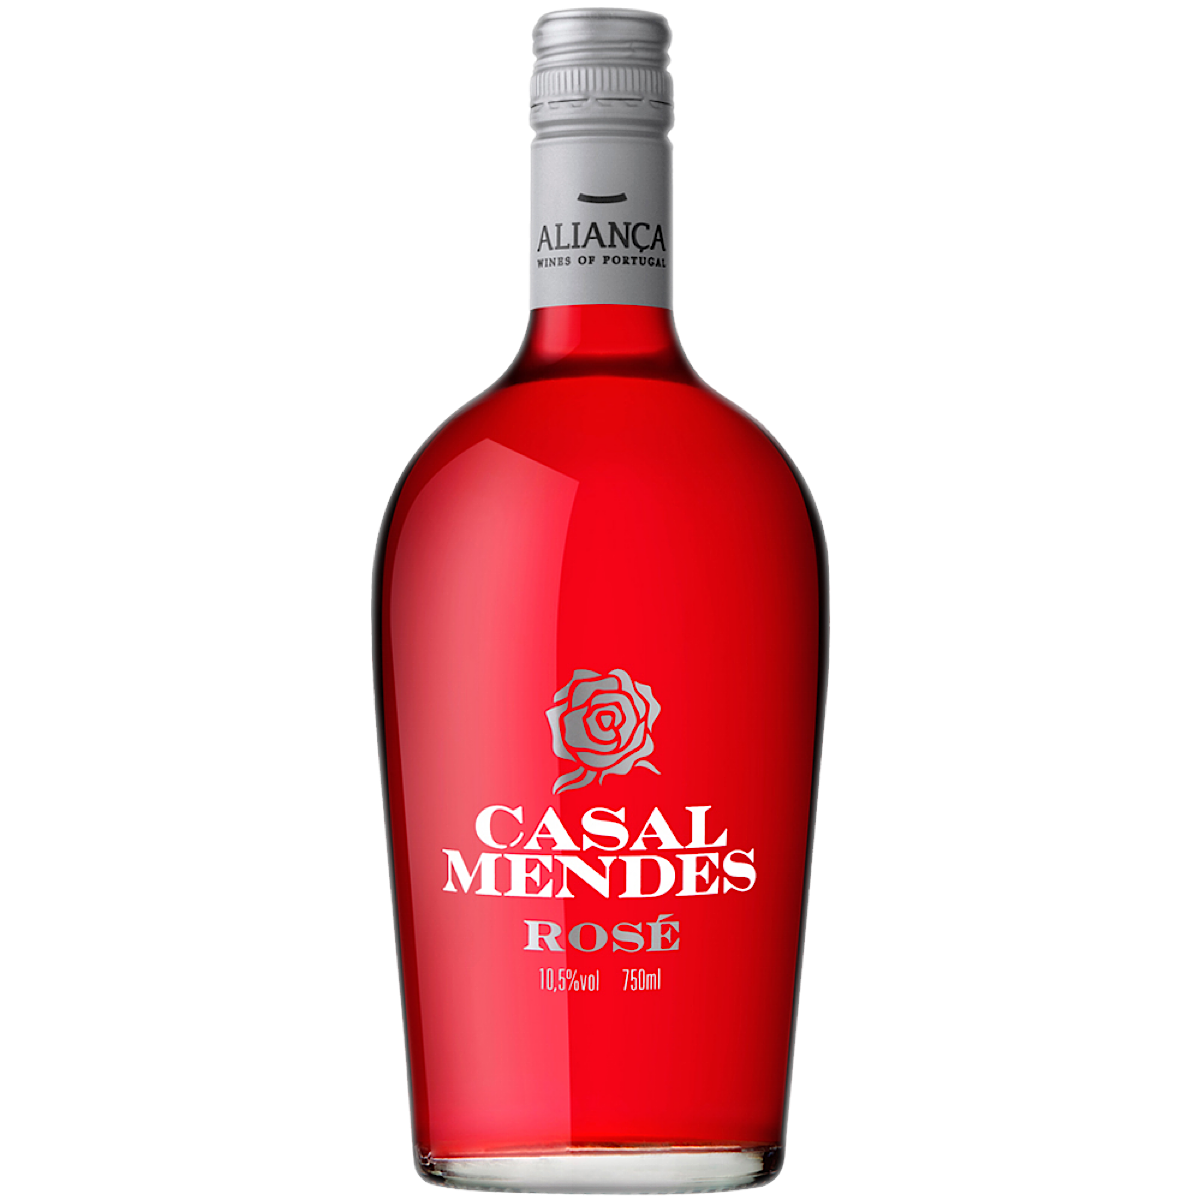 Casal Mendes Rosé, Bairrada NV 6 Bottle Case 75cl